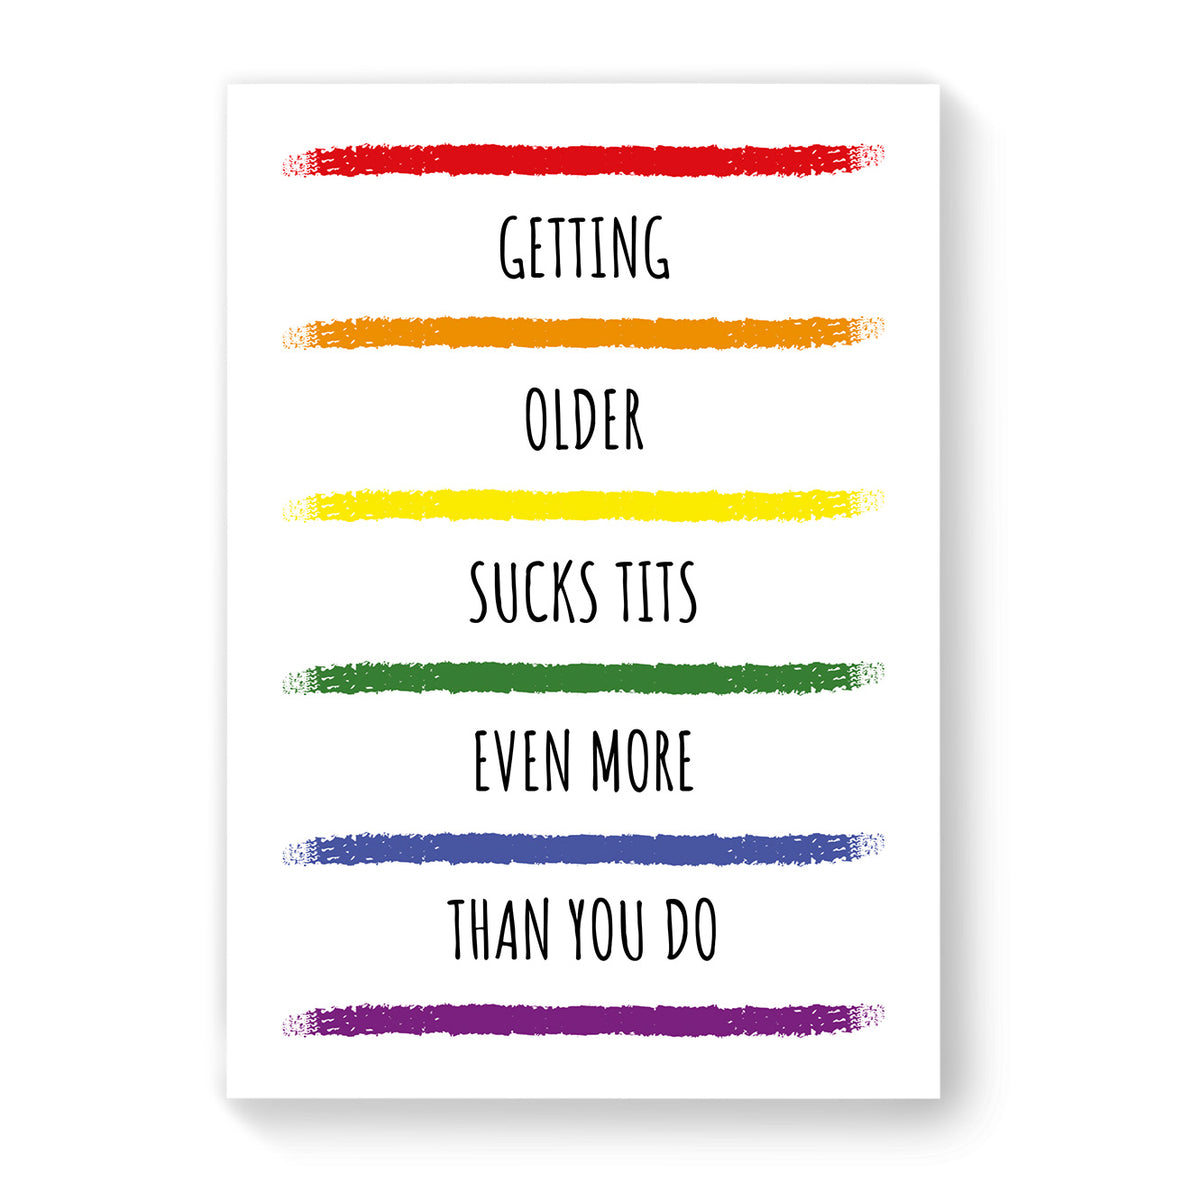 Getting older sucks tits - Lesbian Birthday Card - White Rainbow Stripes | Gift